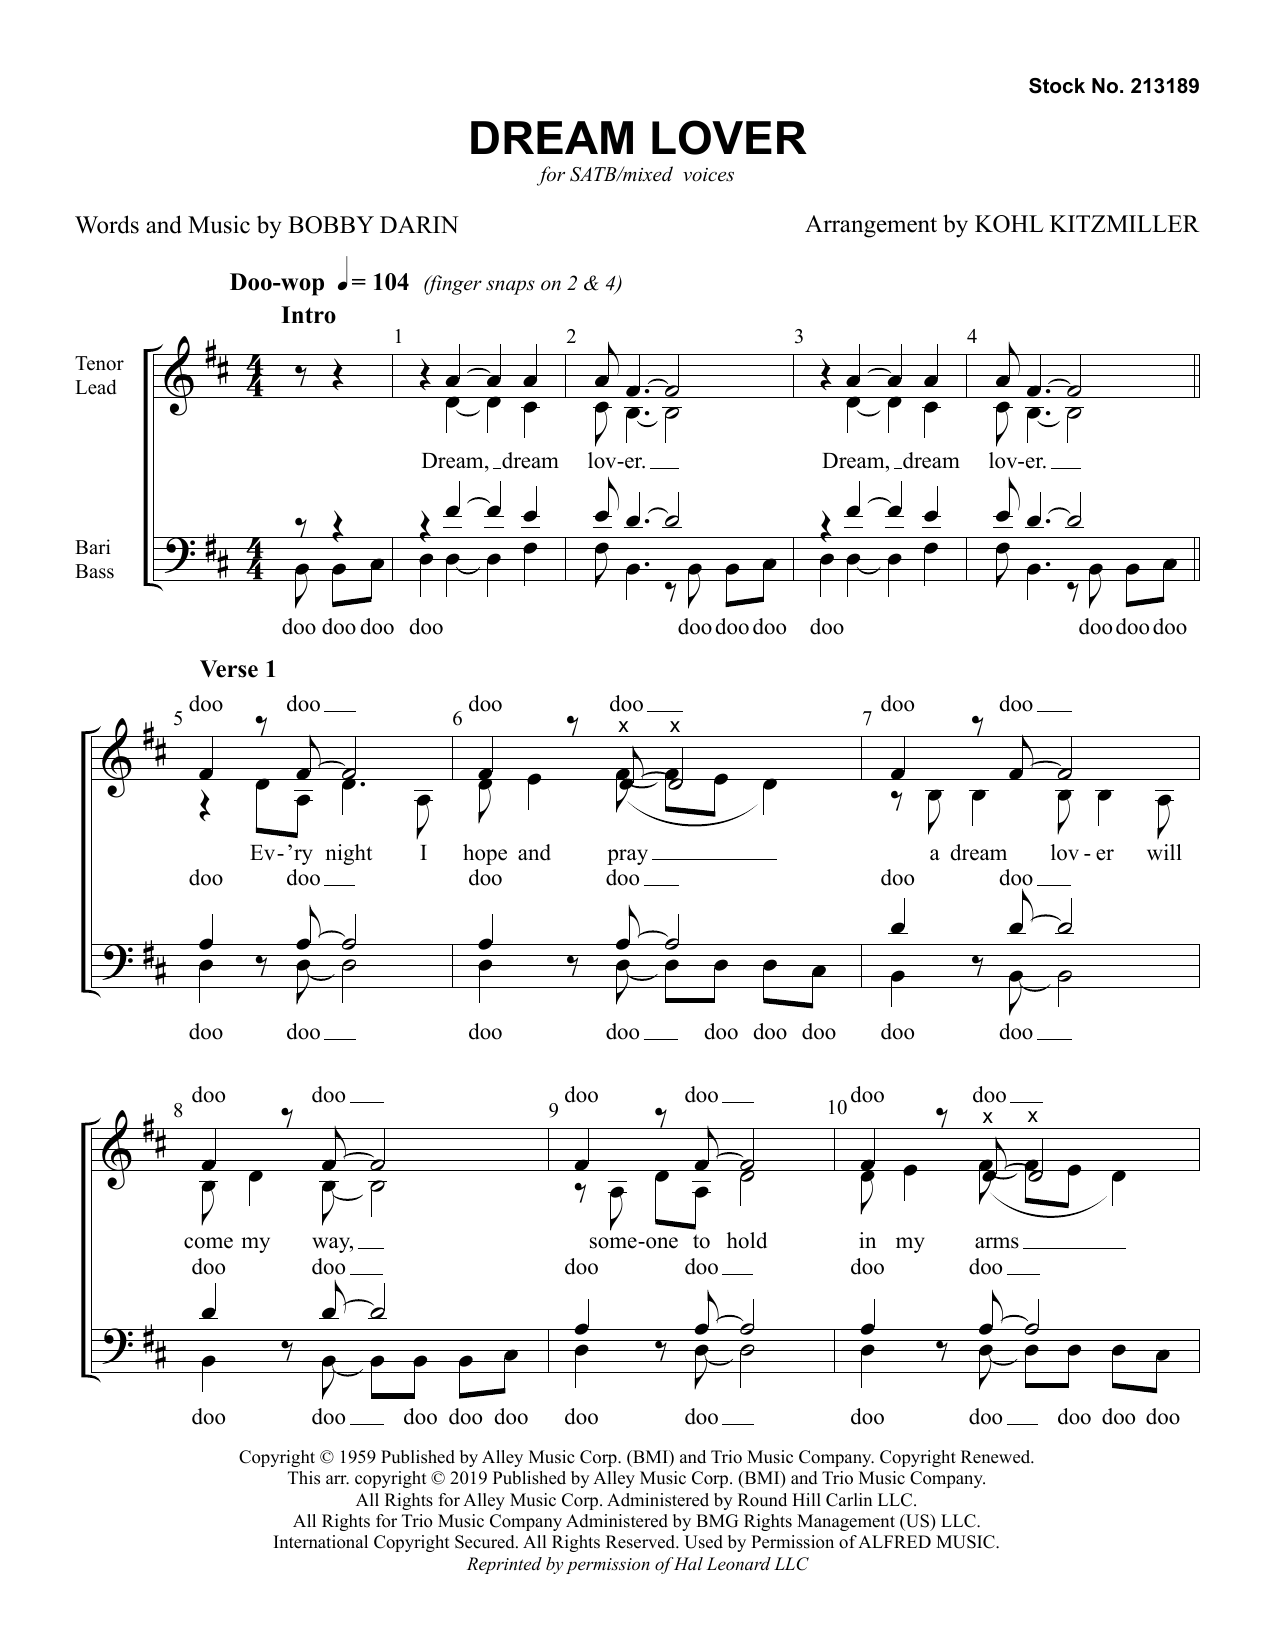 Download The Manhattan Transfer Dream Lover (arr. Kohl Kitzmiller) Sheet Music and learn how to play TTBB Choir PDF digital score in minutes